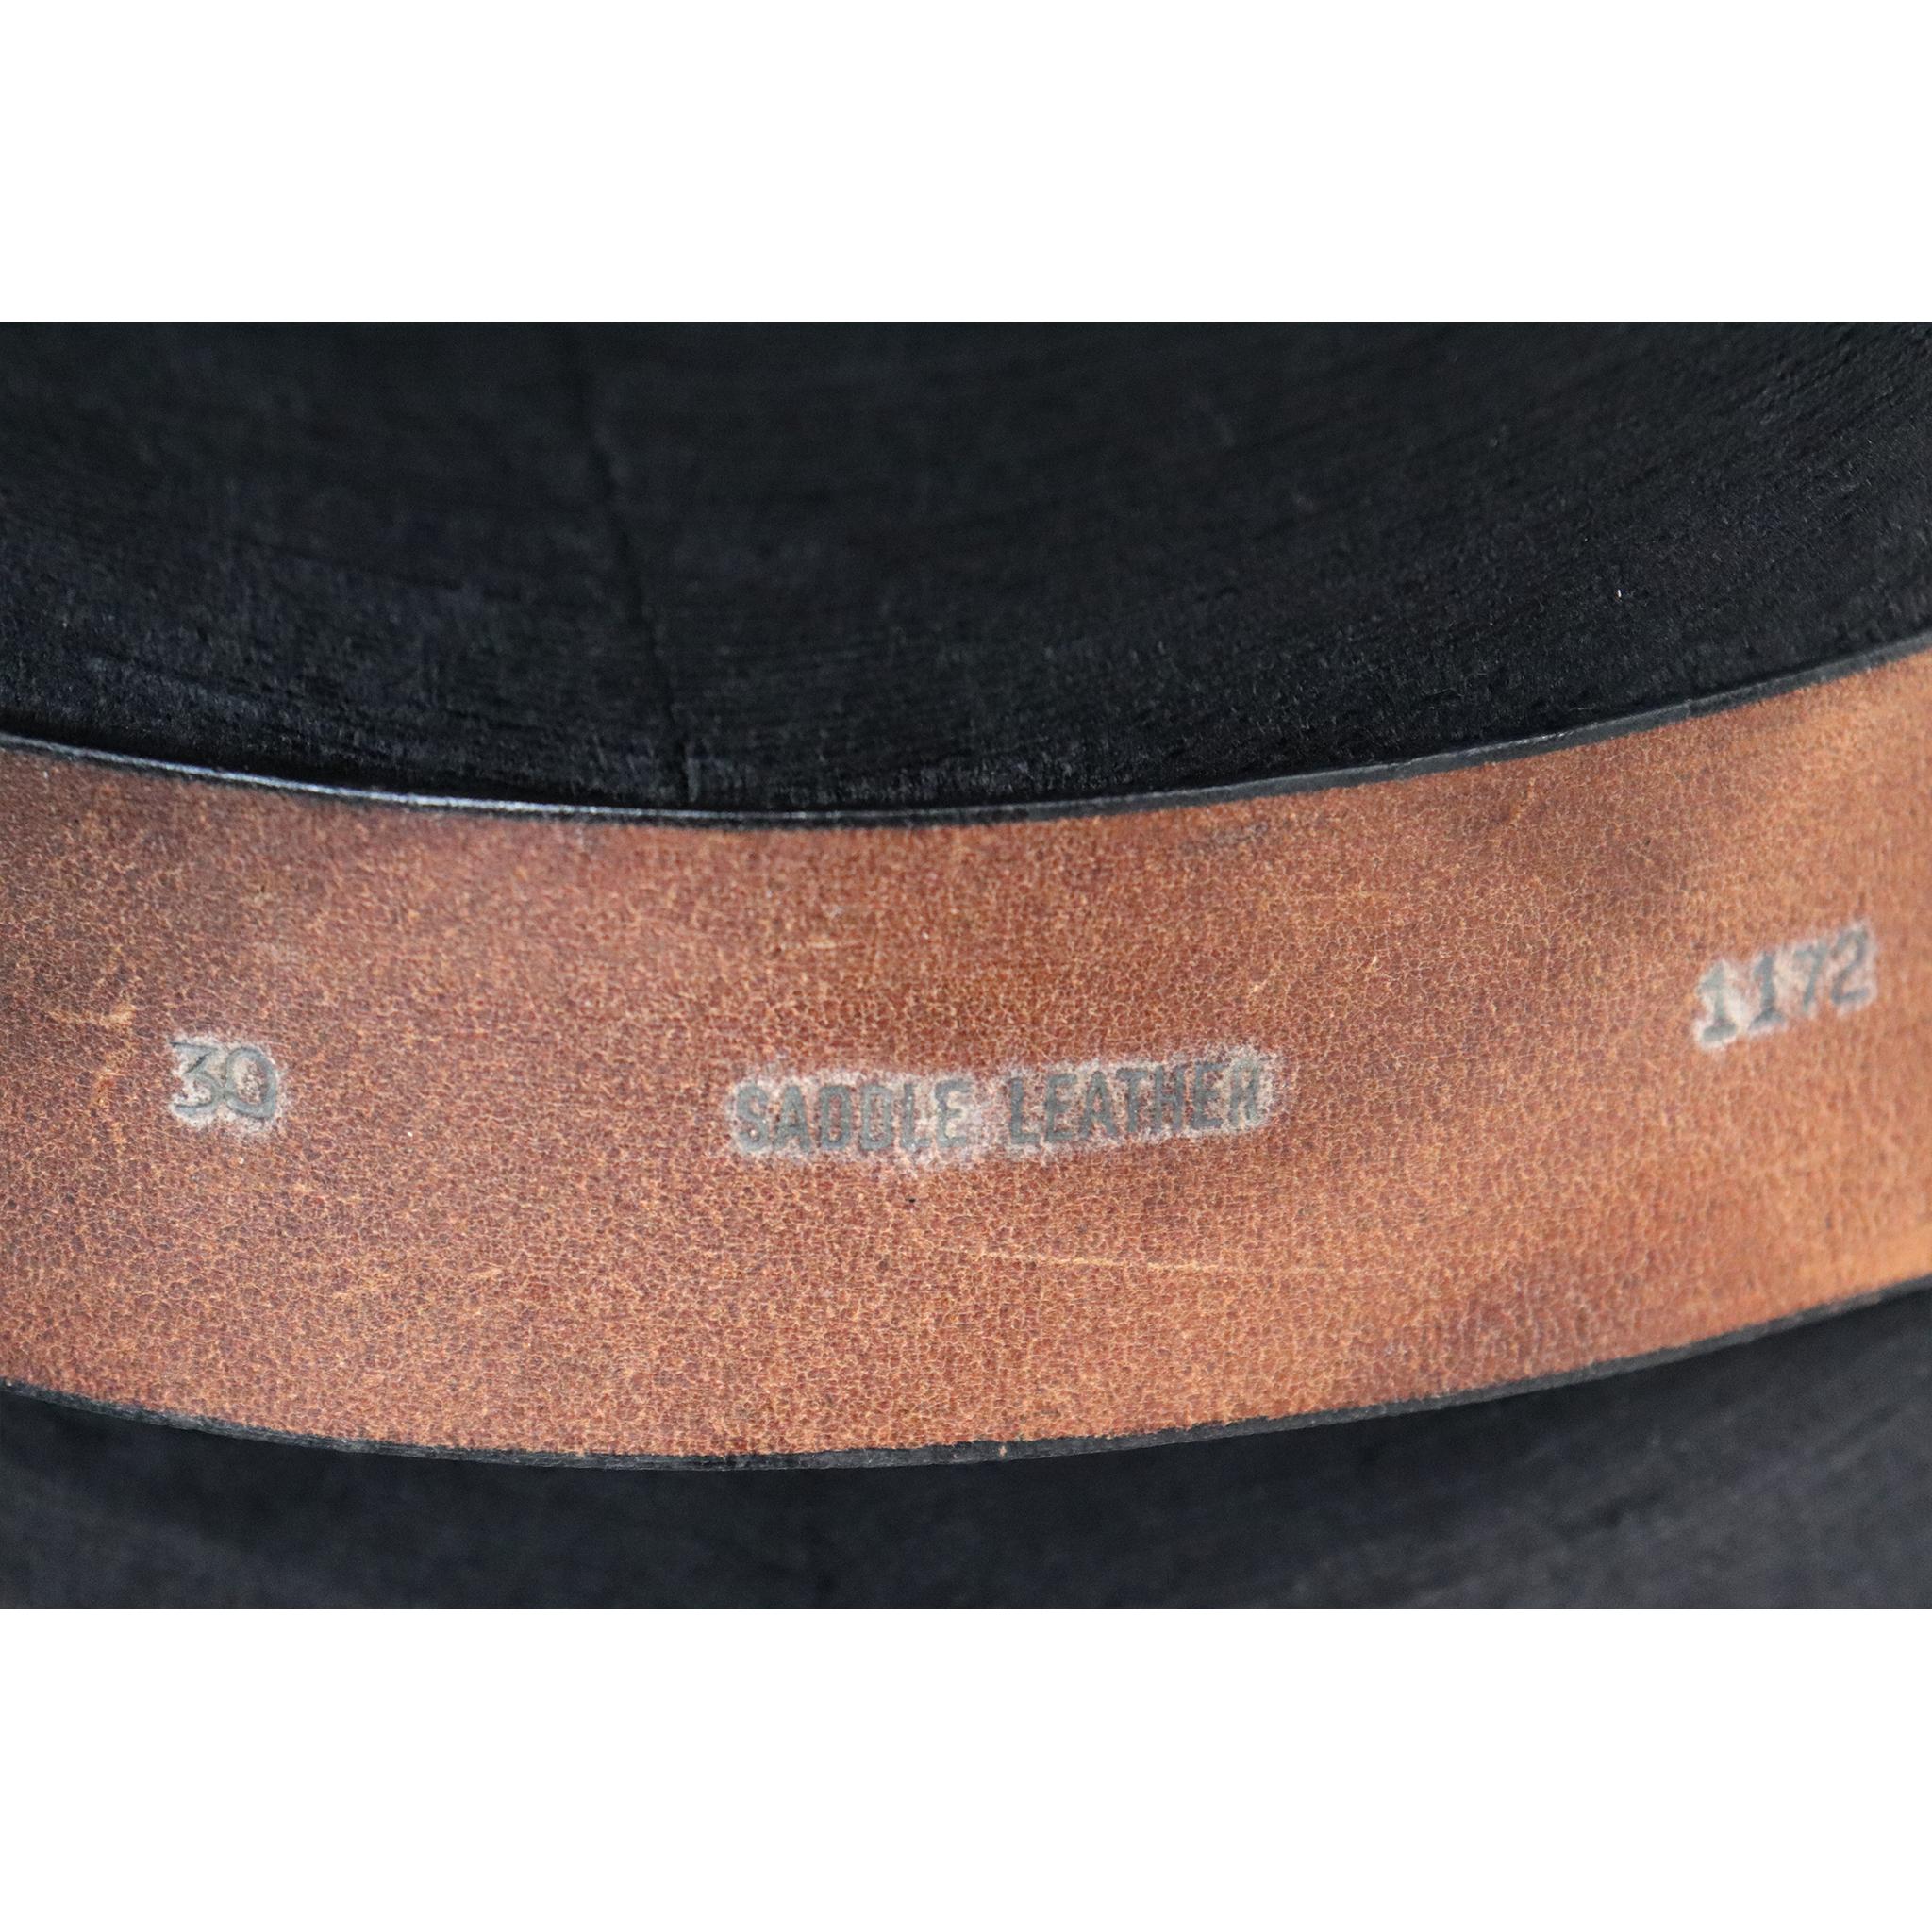 Pierre Cardin Black Belt W/ Stainless Steel Mid-Century Abstract Motif Buckle For Sale 4